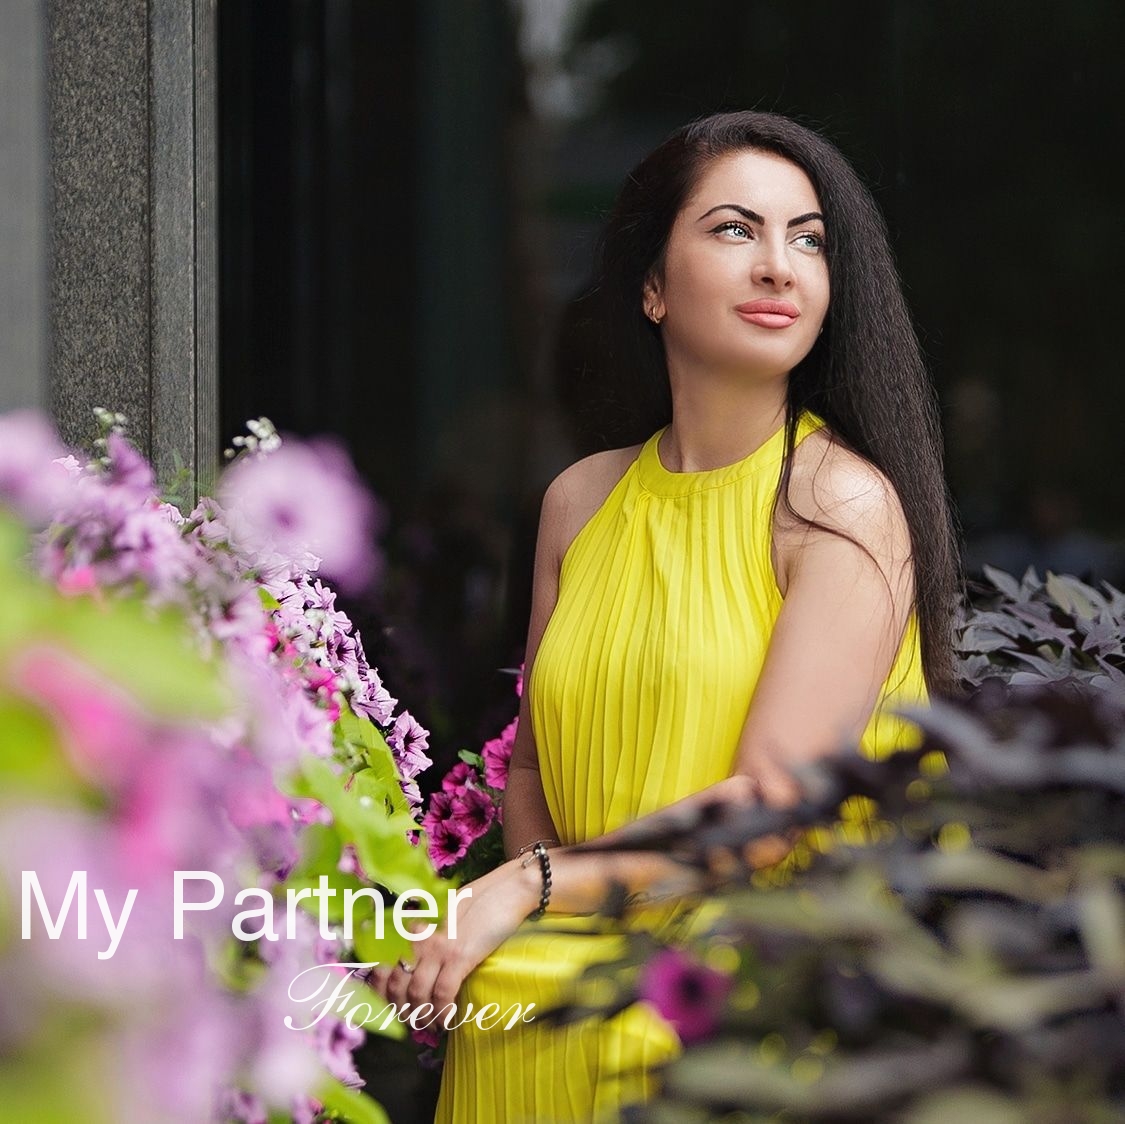 Dating Service to Meet Single Ukrainian Lady Karina from Dniepropetrovsk, Ukraine